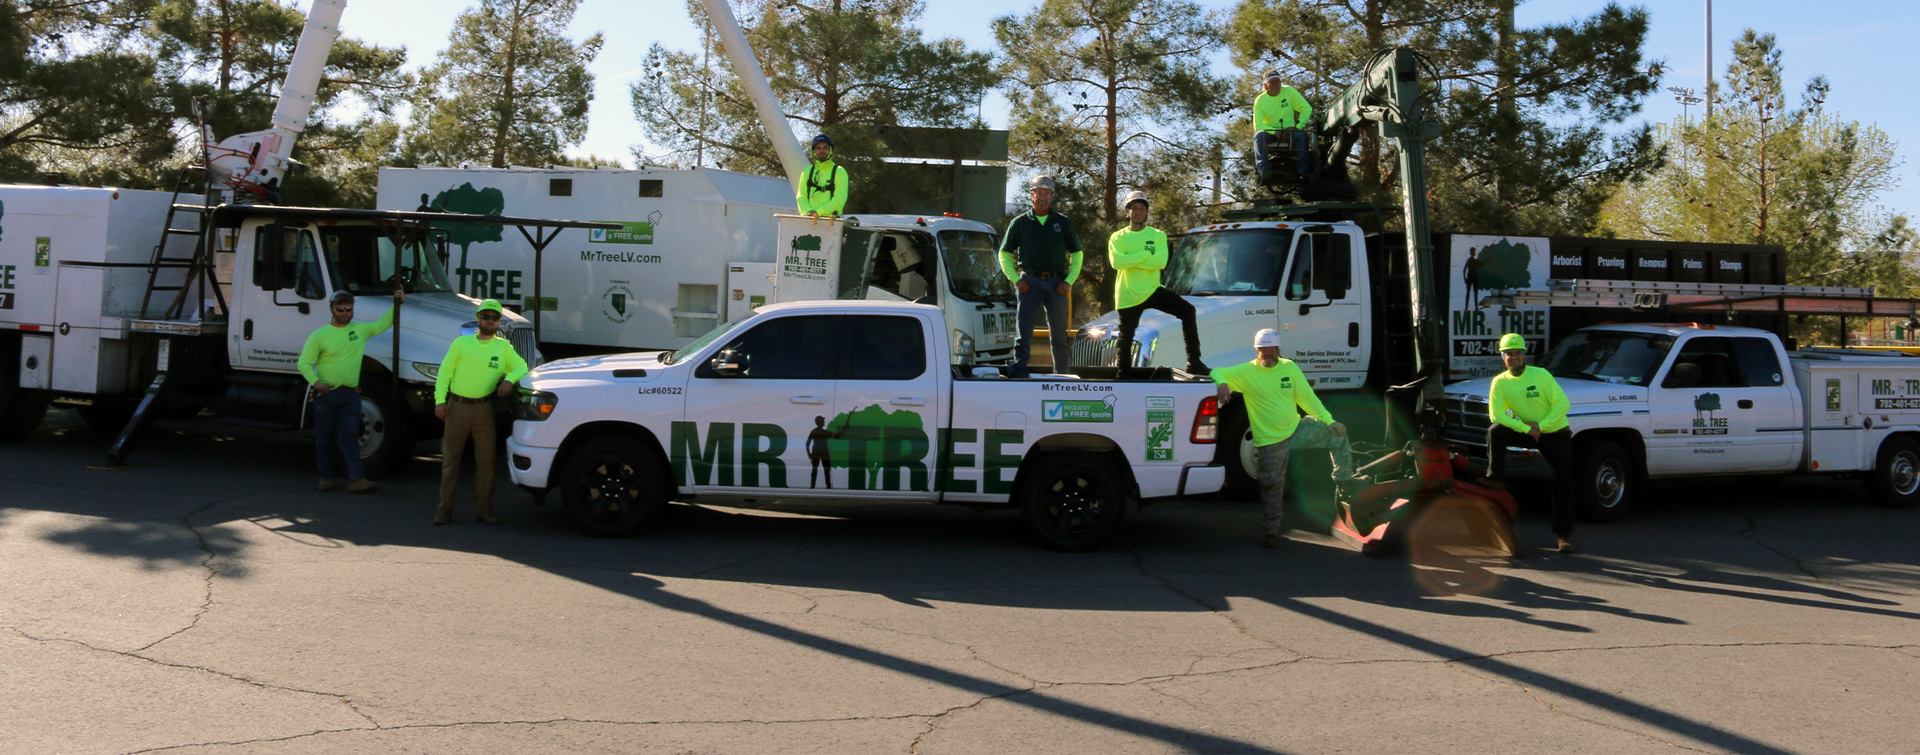 Mre Tree - Tree Service Las Vegas and Henderson Nevada